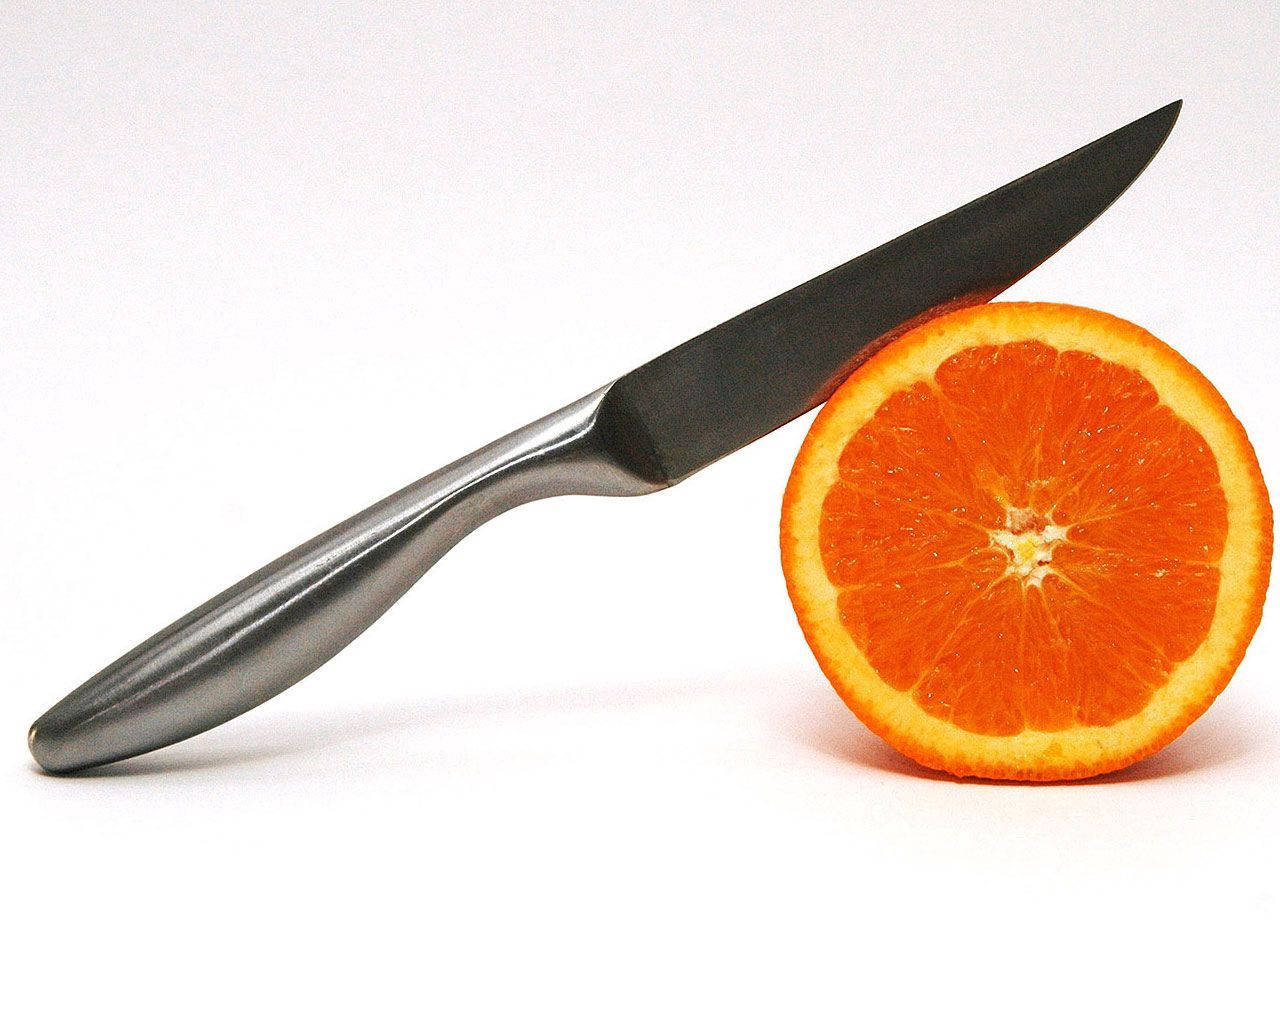 Cut open, an orange provides a refreshing burst of natural sweetness. Wallpaper